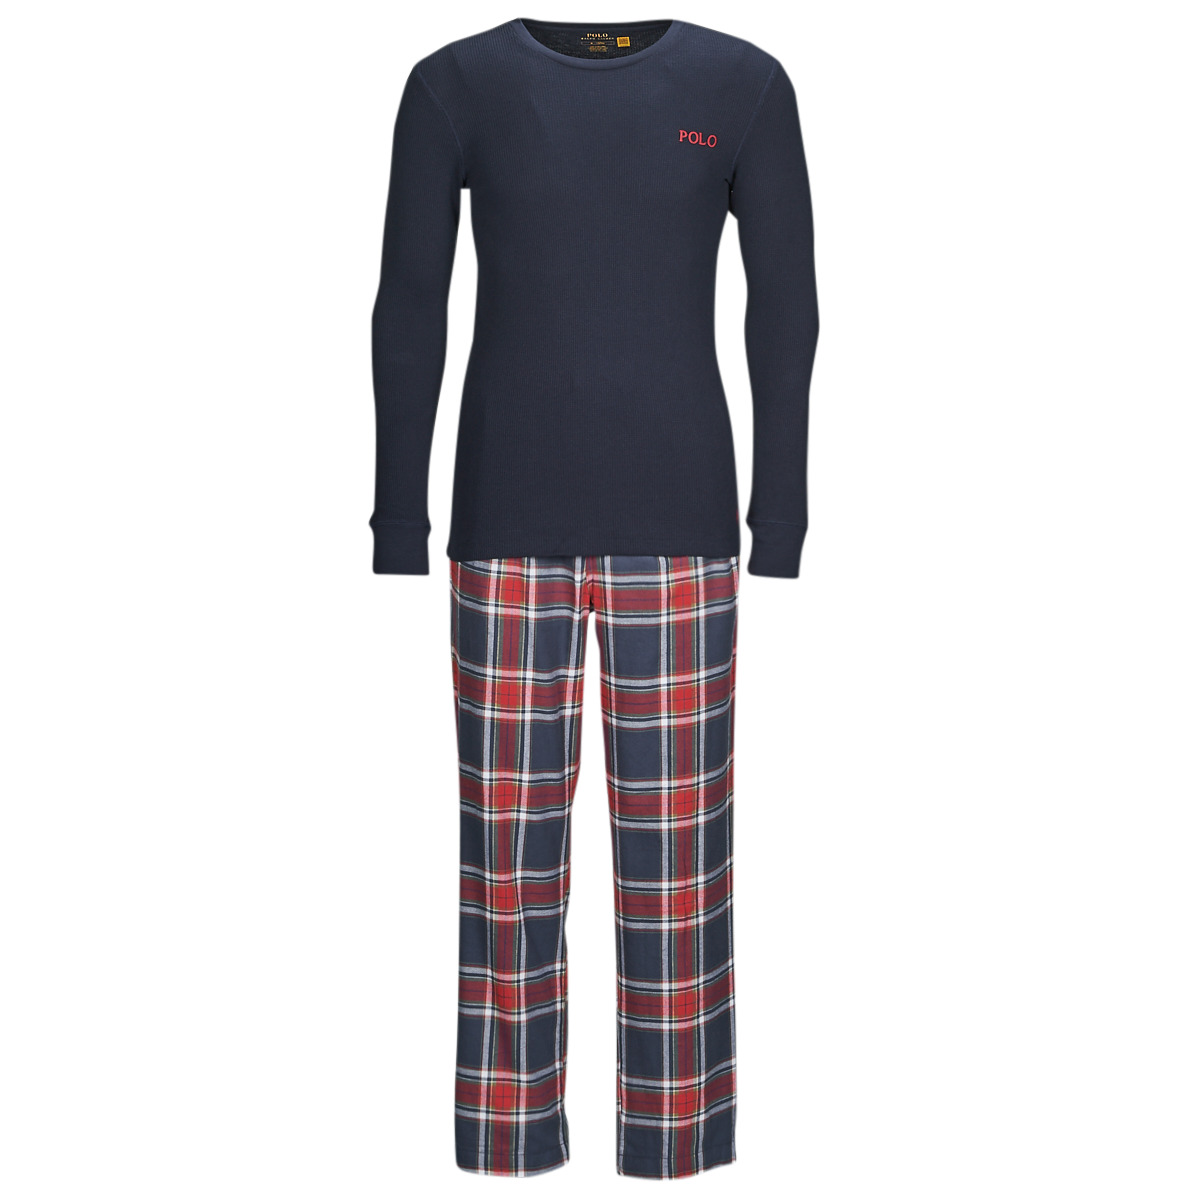 textil Herr Pyjamas/nattlinne Polo Ralph Lauren L/S PJ SLEEP SET Blå / Röd